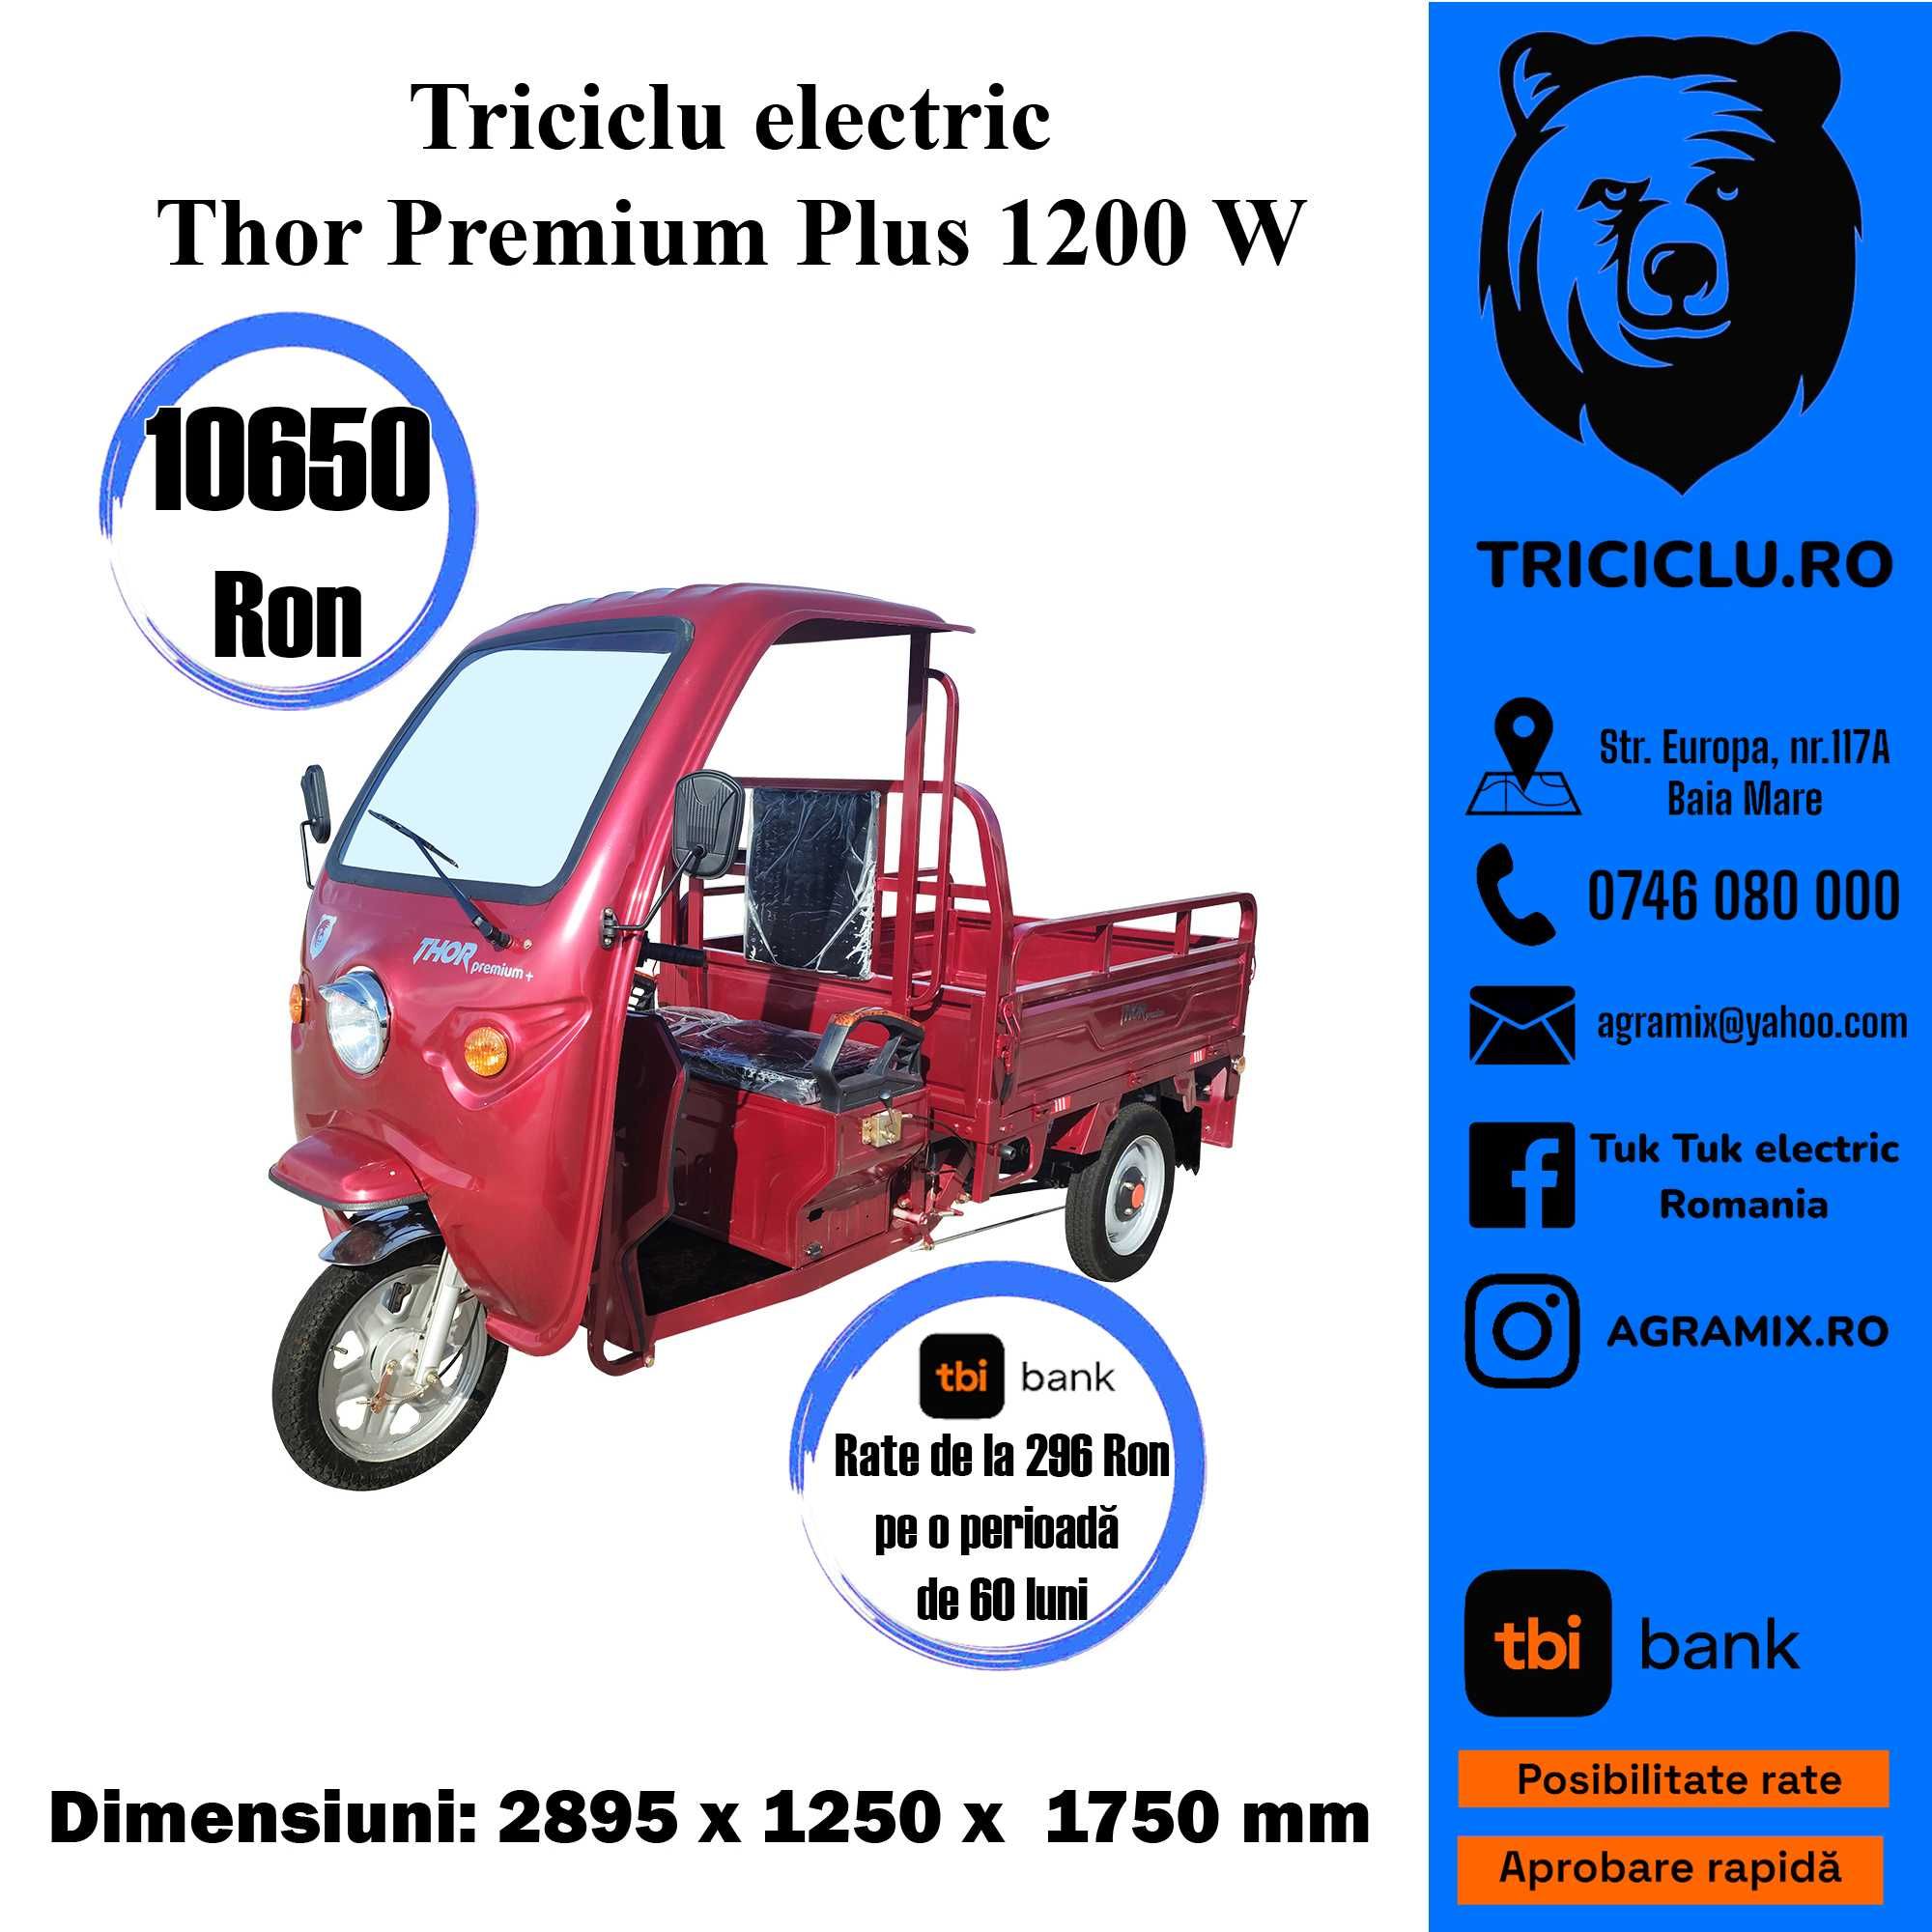 Triciclu NOU electric marca THOR Premium CIV Agramix